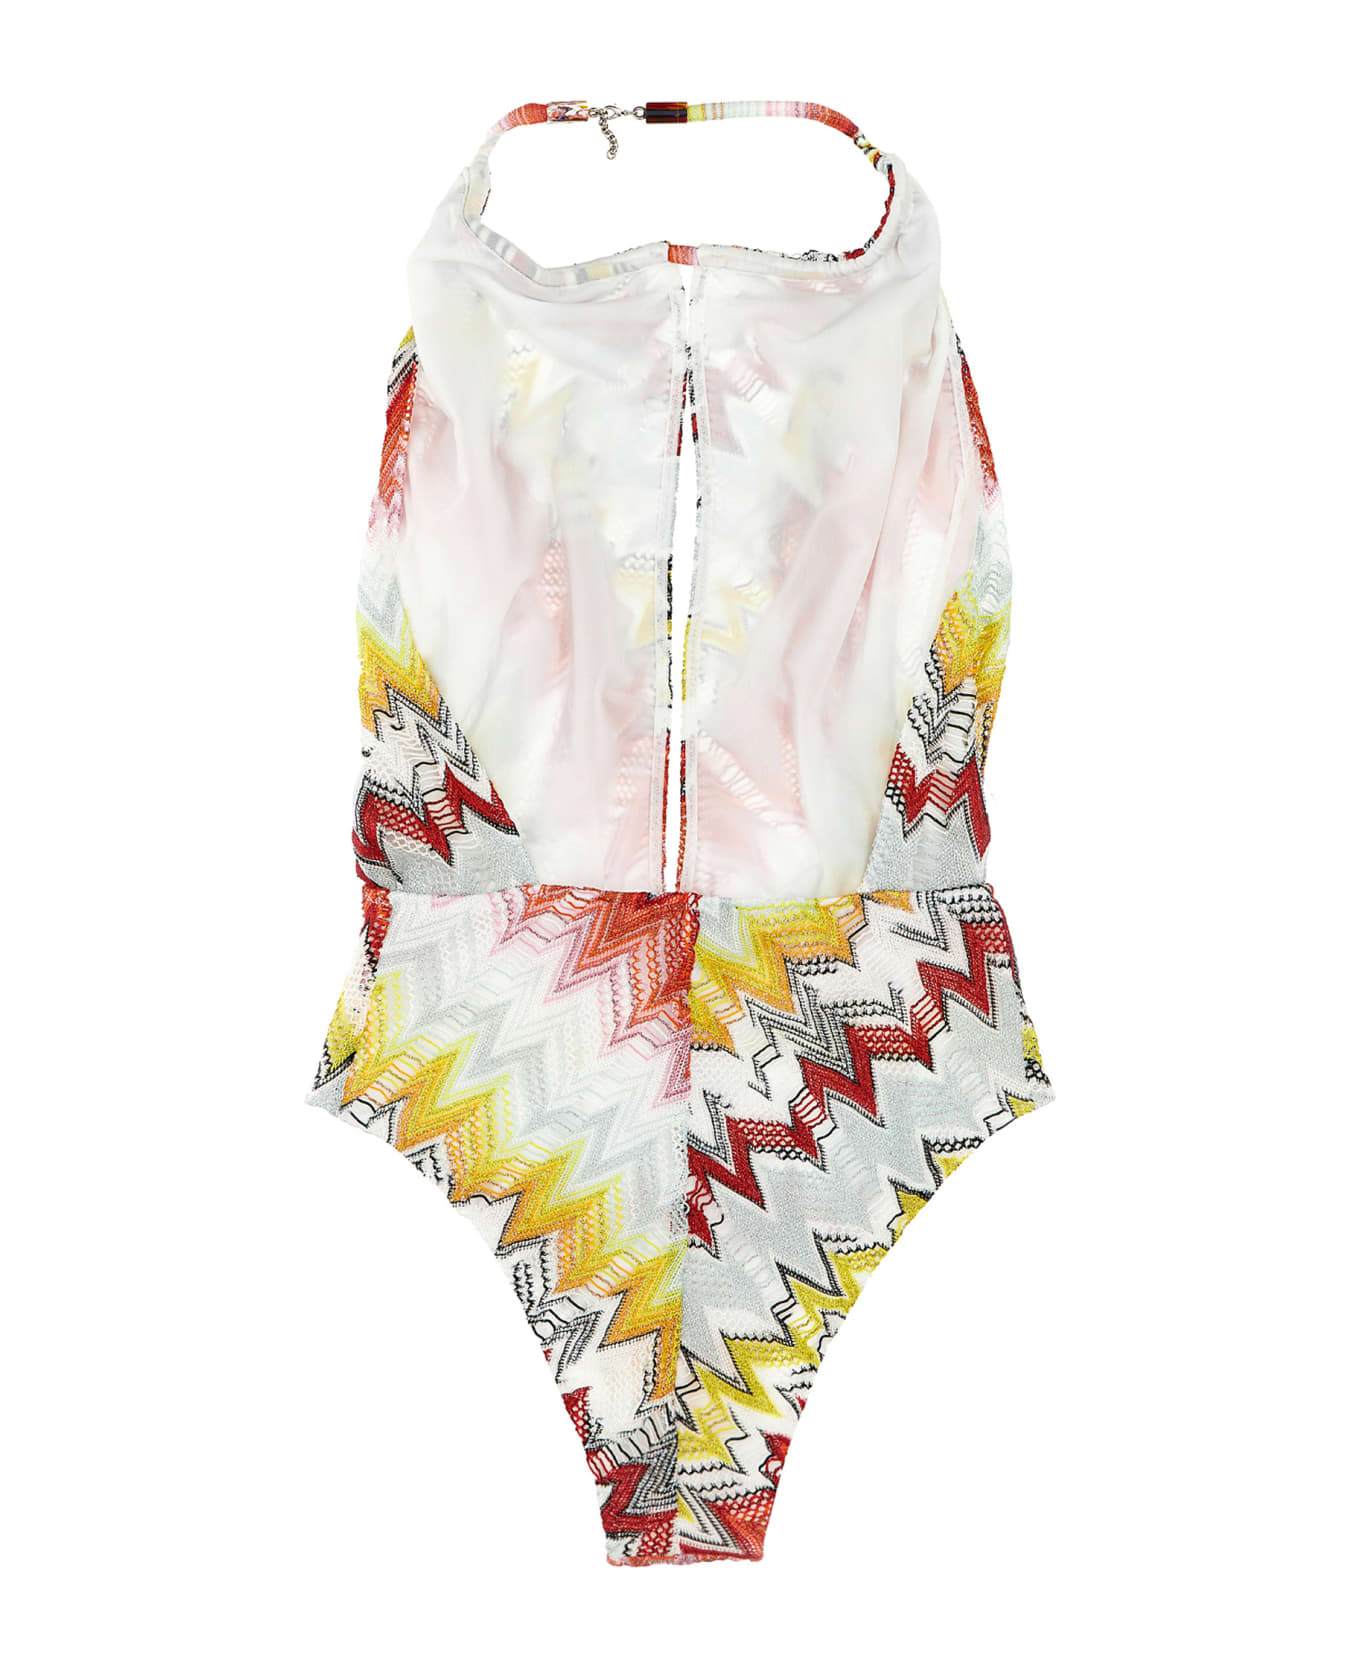 Missoni Patterned One-piece Swimsuit Wide Neckline - Multicolor